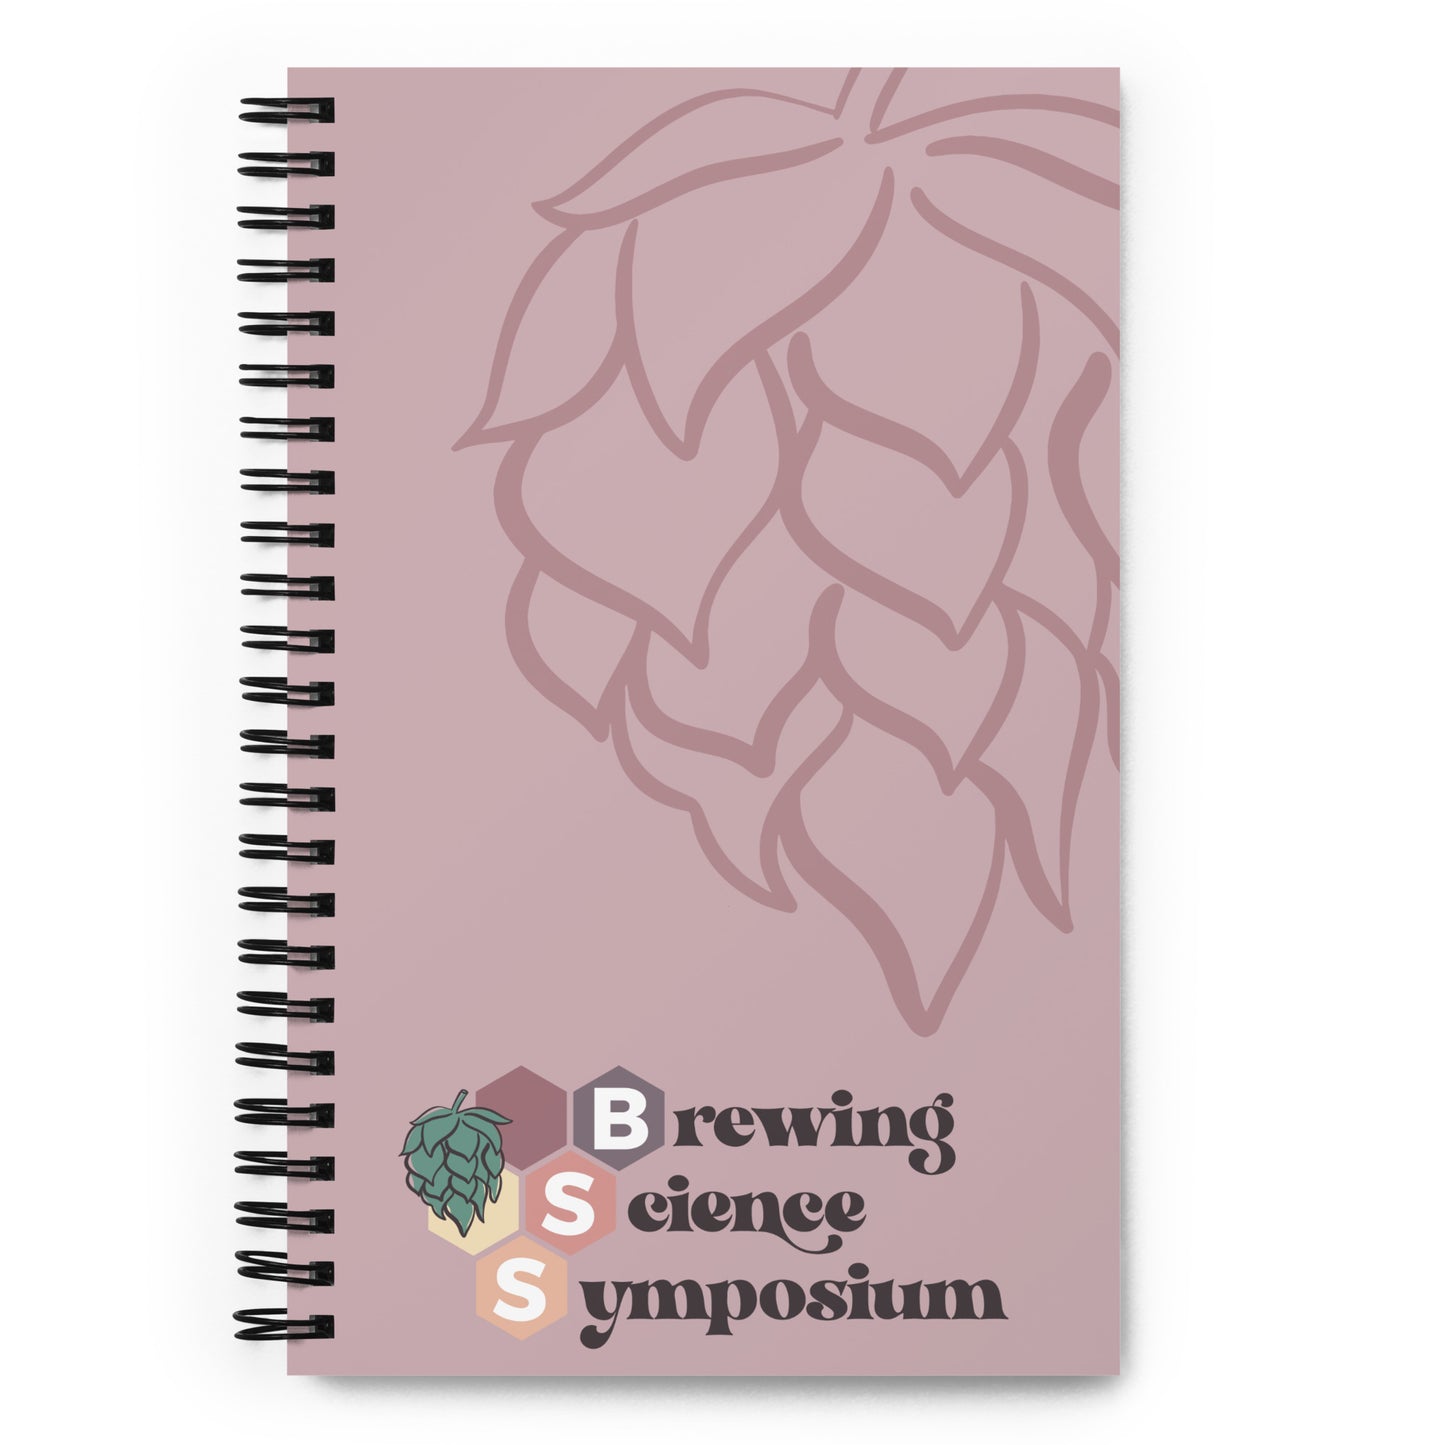 Brewing Science Symposium Spiral Notebook